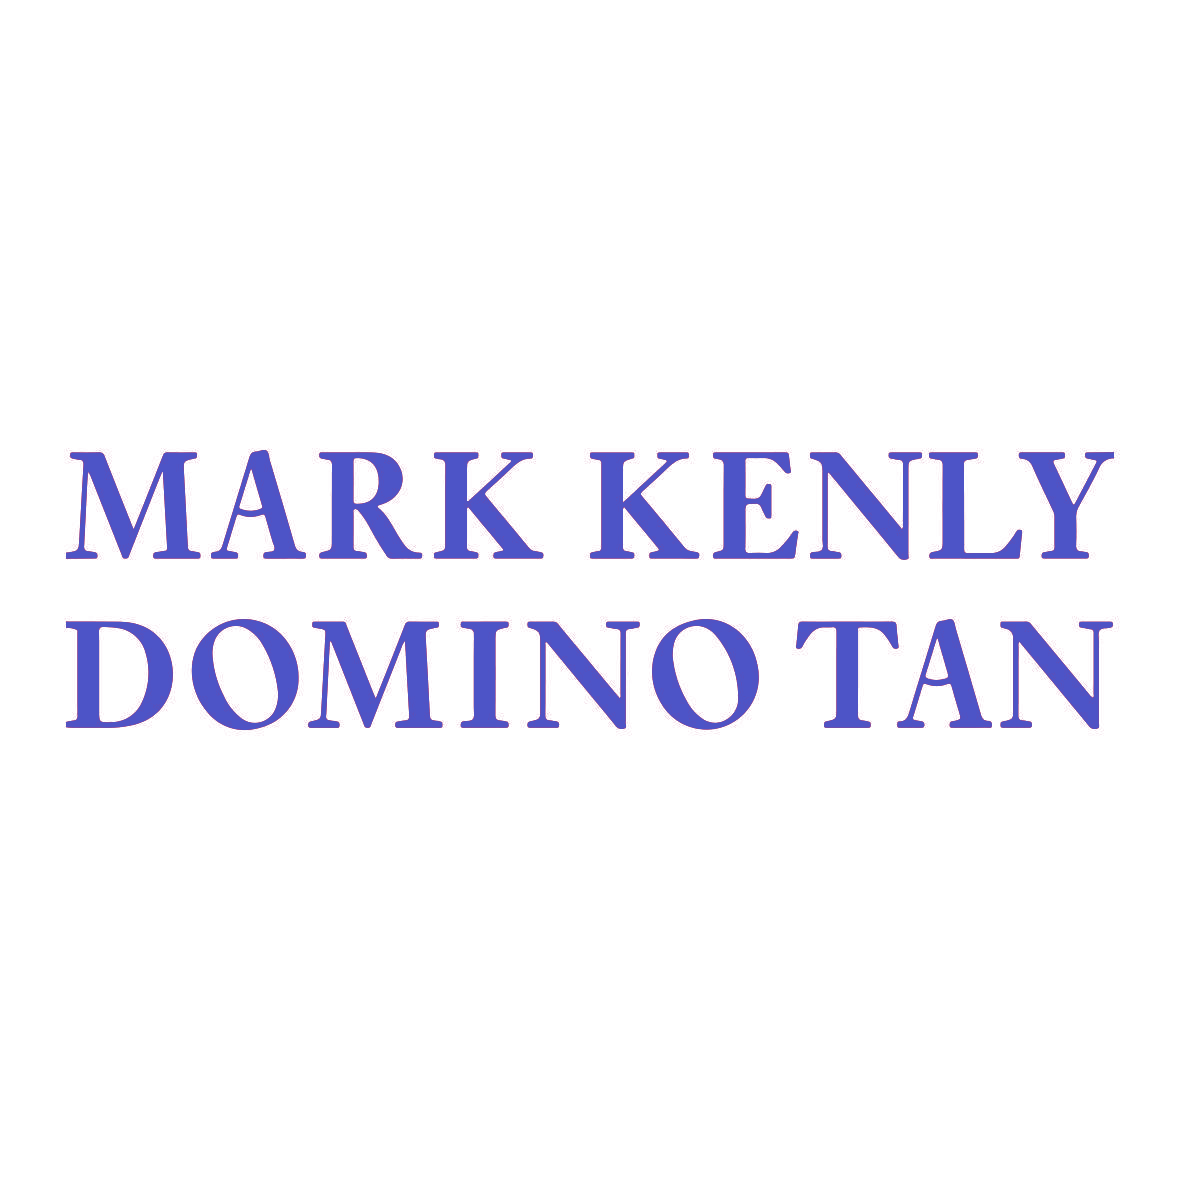 MARK KENLY DOMINO TAN